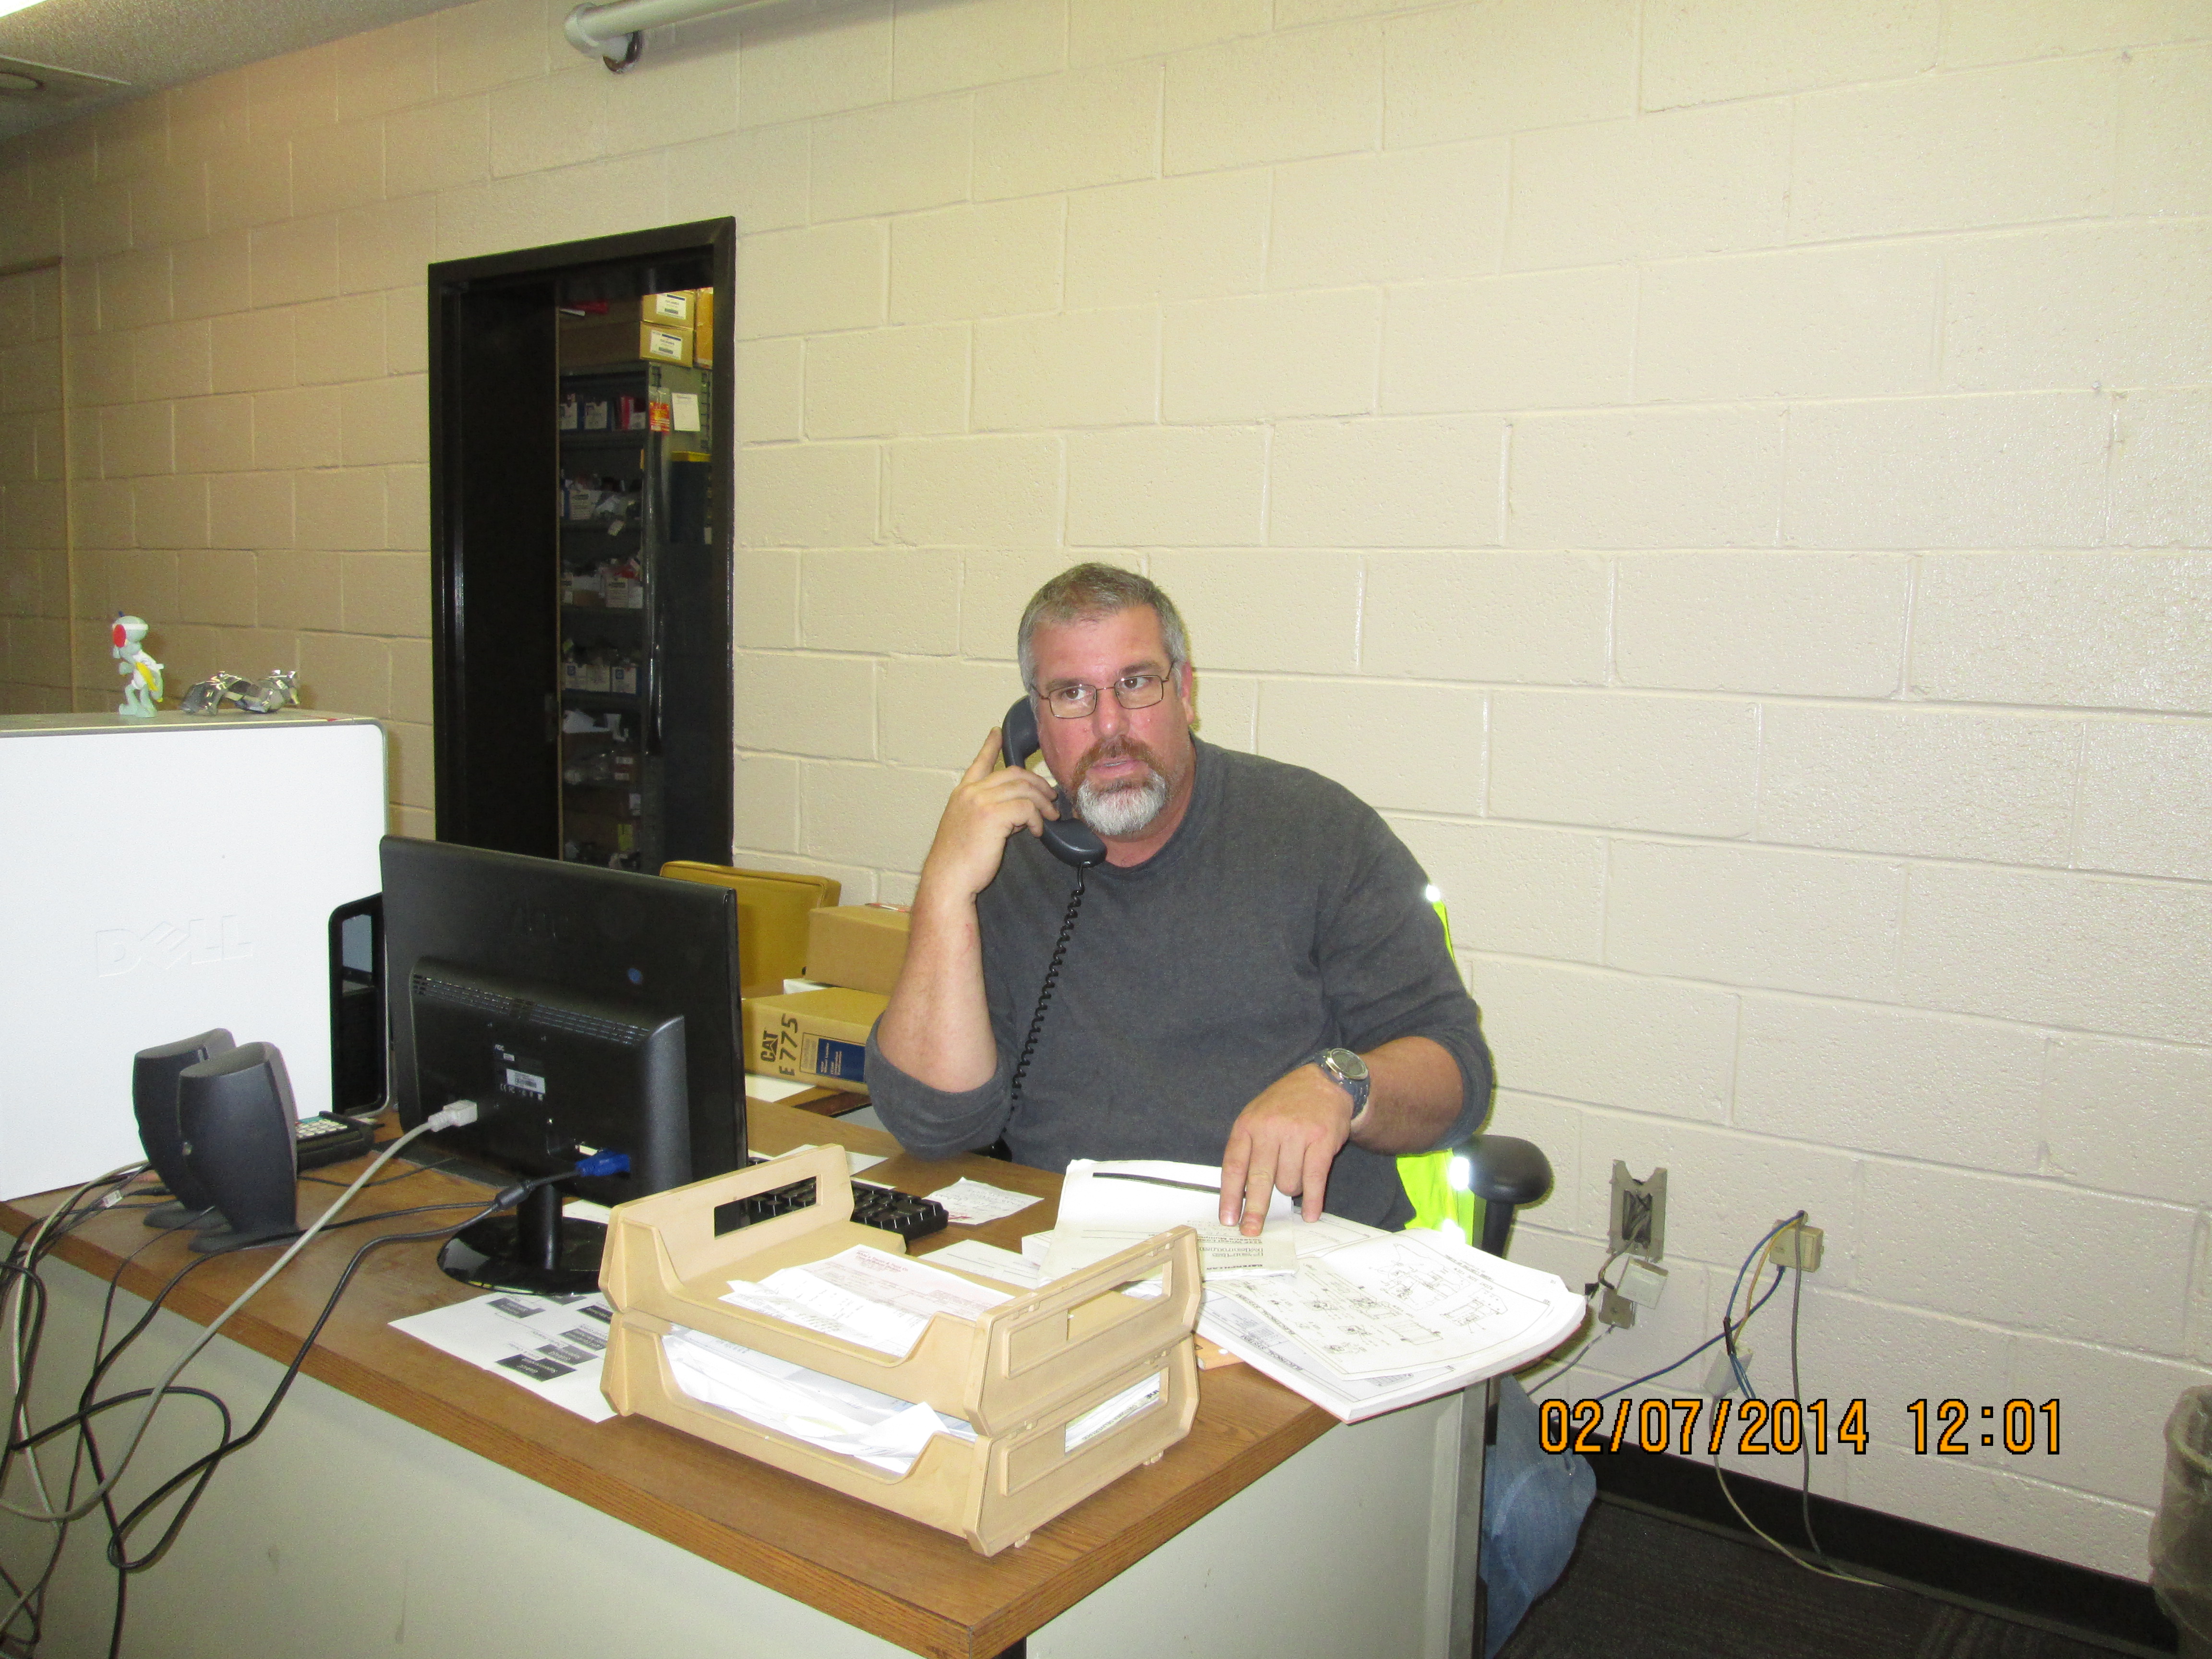 Garage Employee at Desk